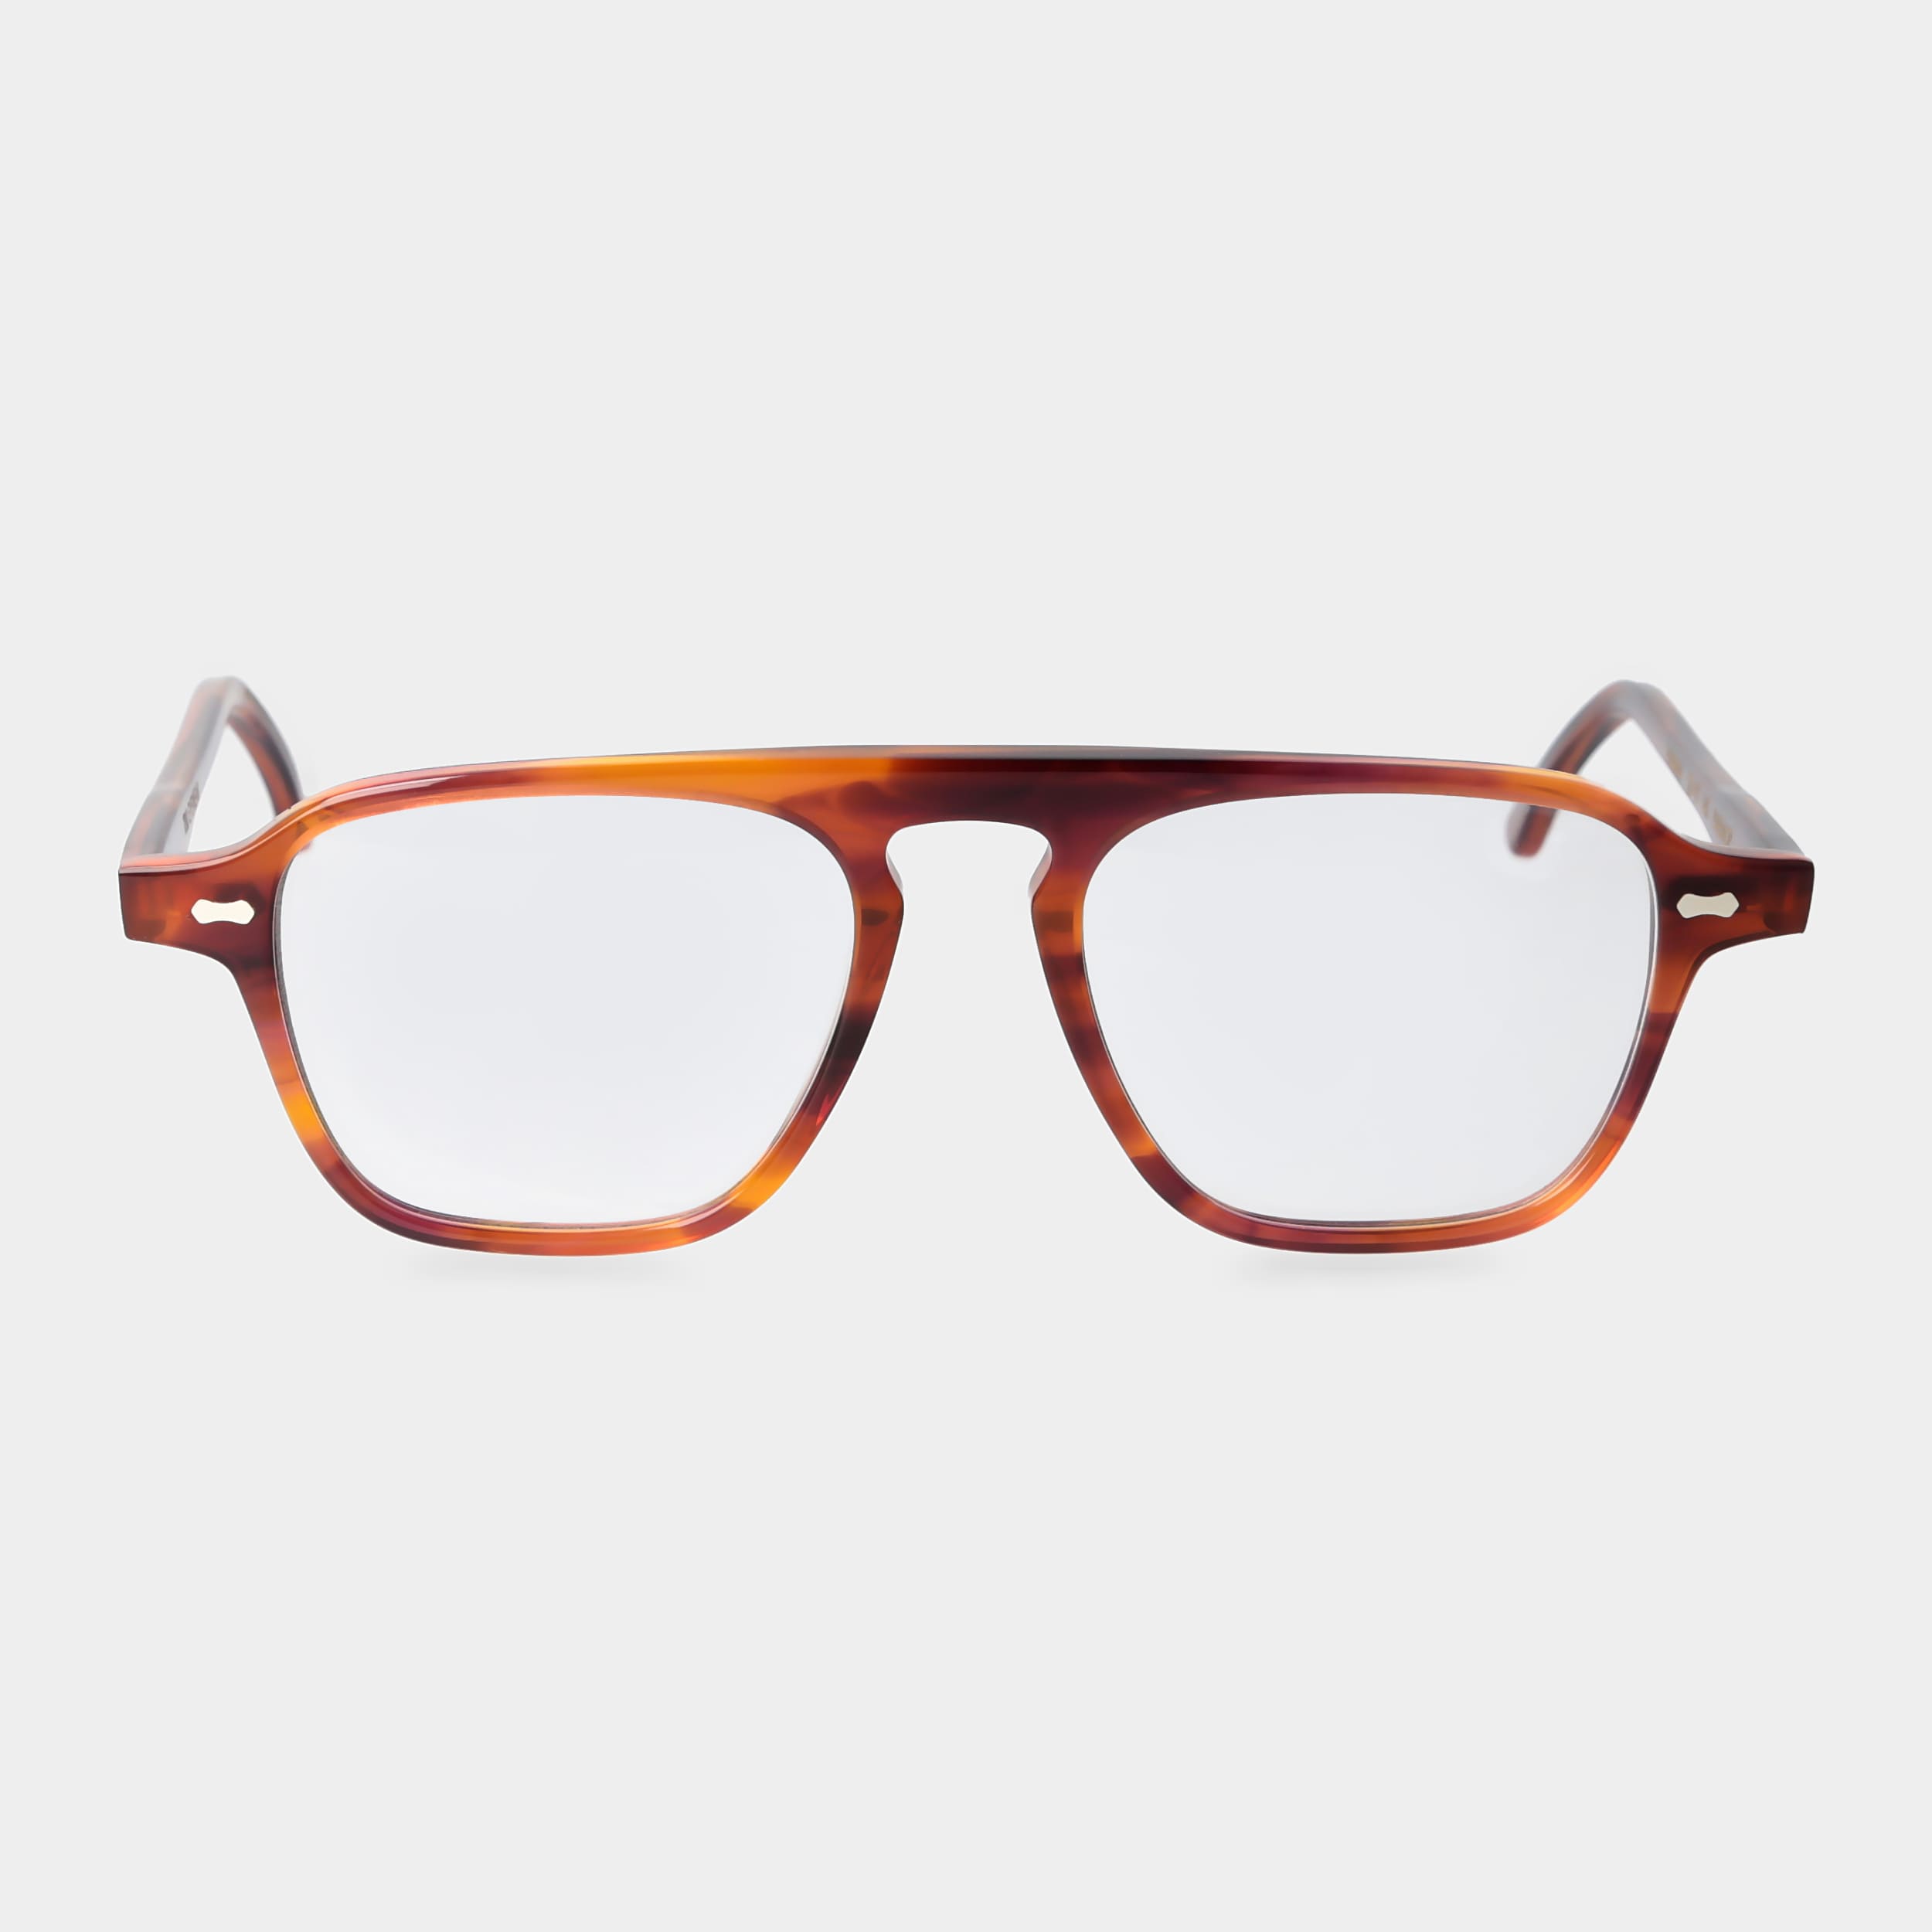 eyeglasses-panama-havana-optical-tbd-eyewear-front